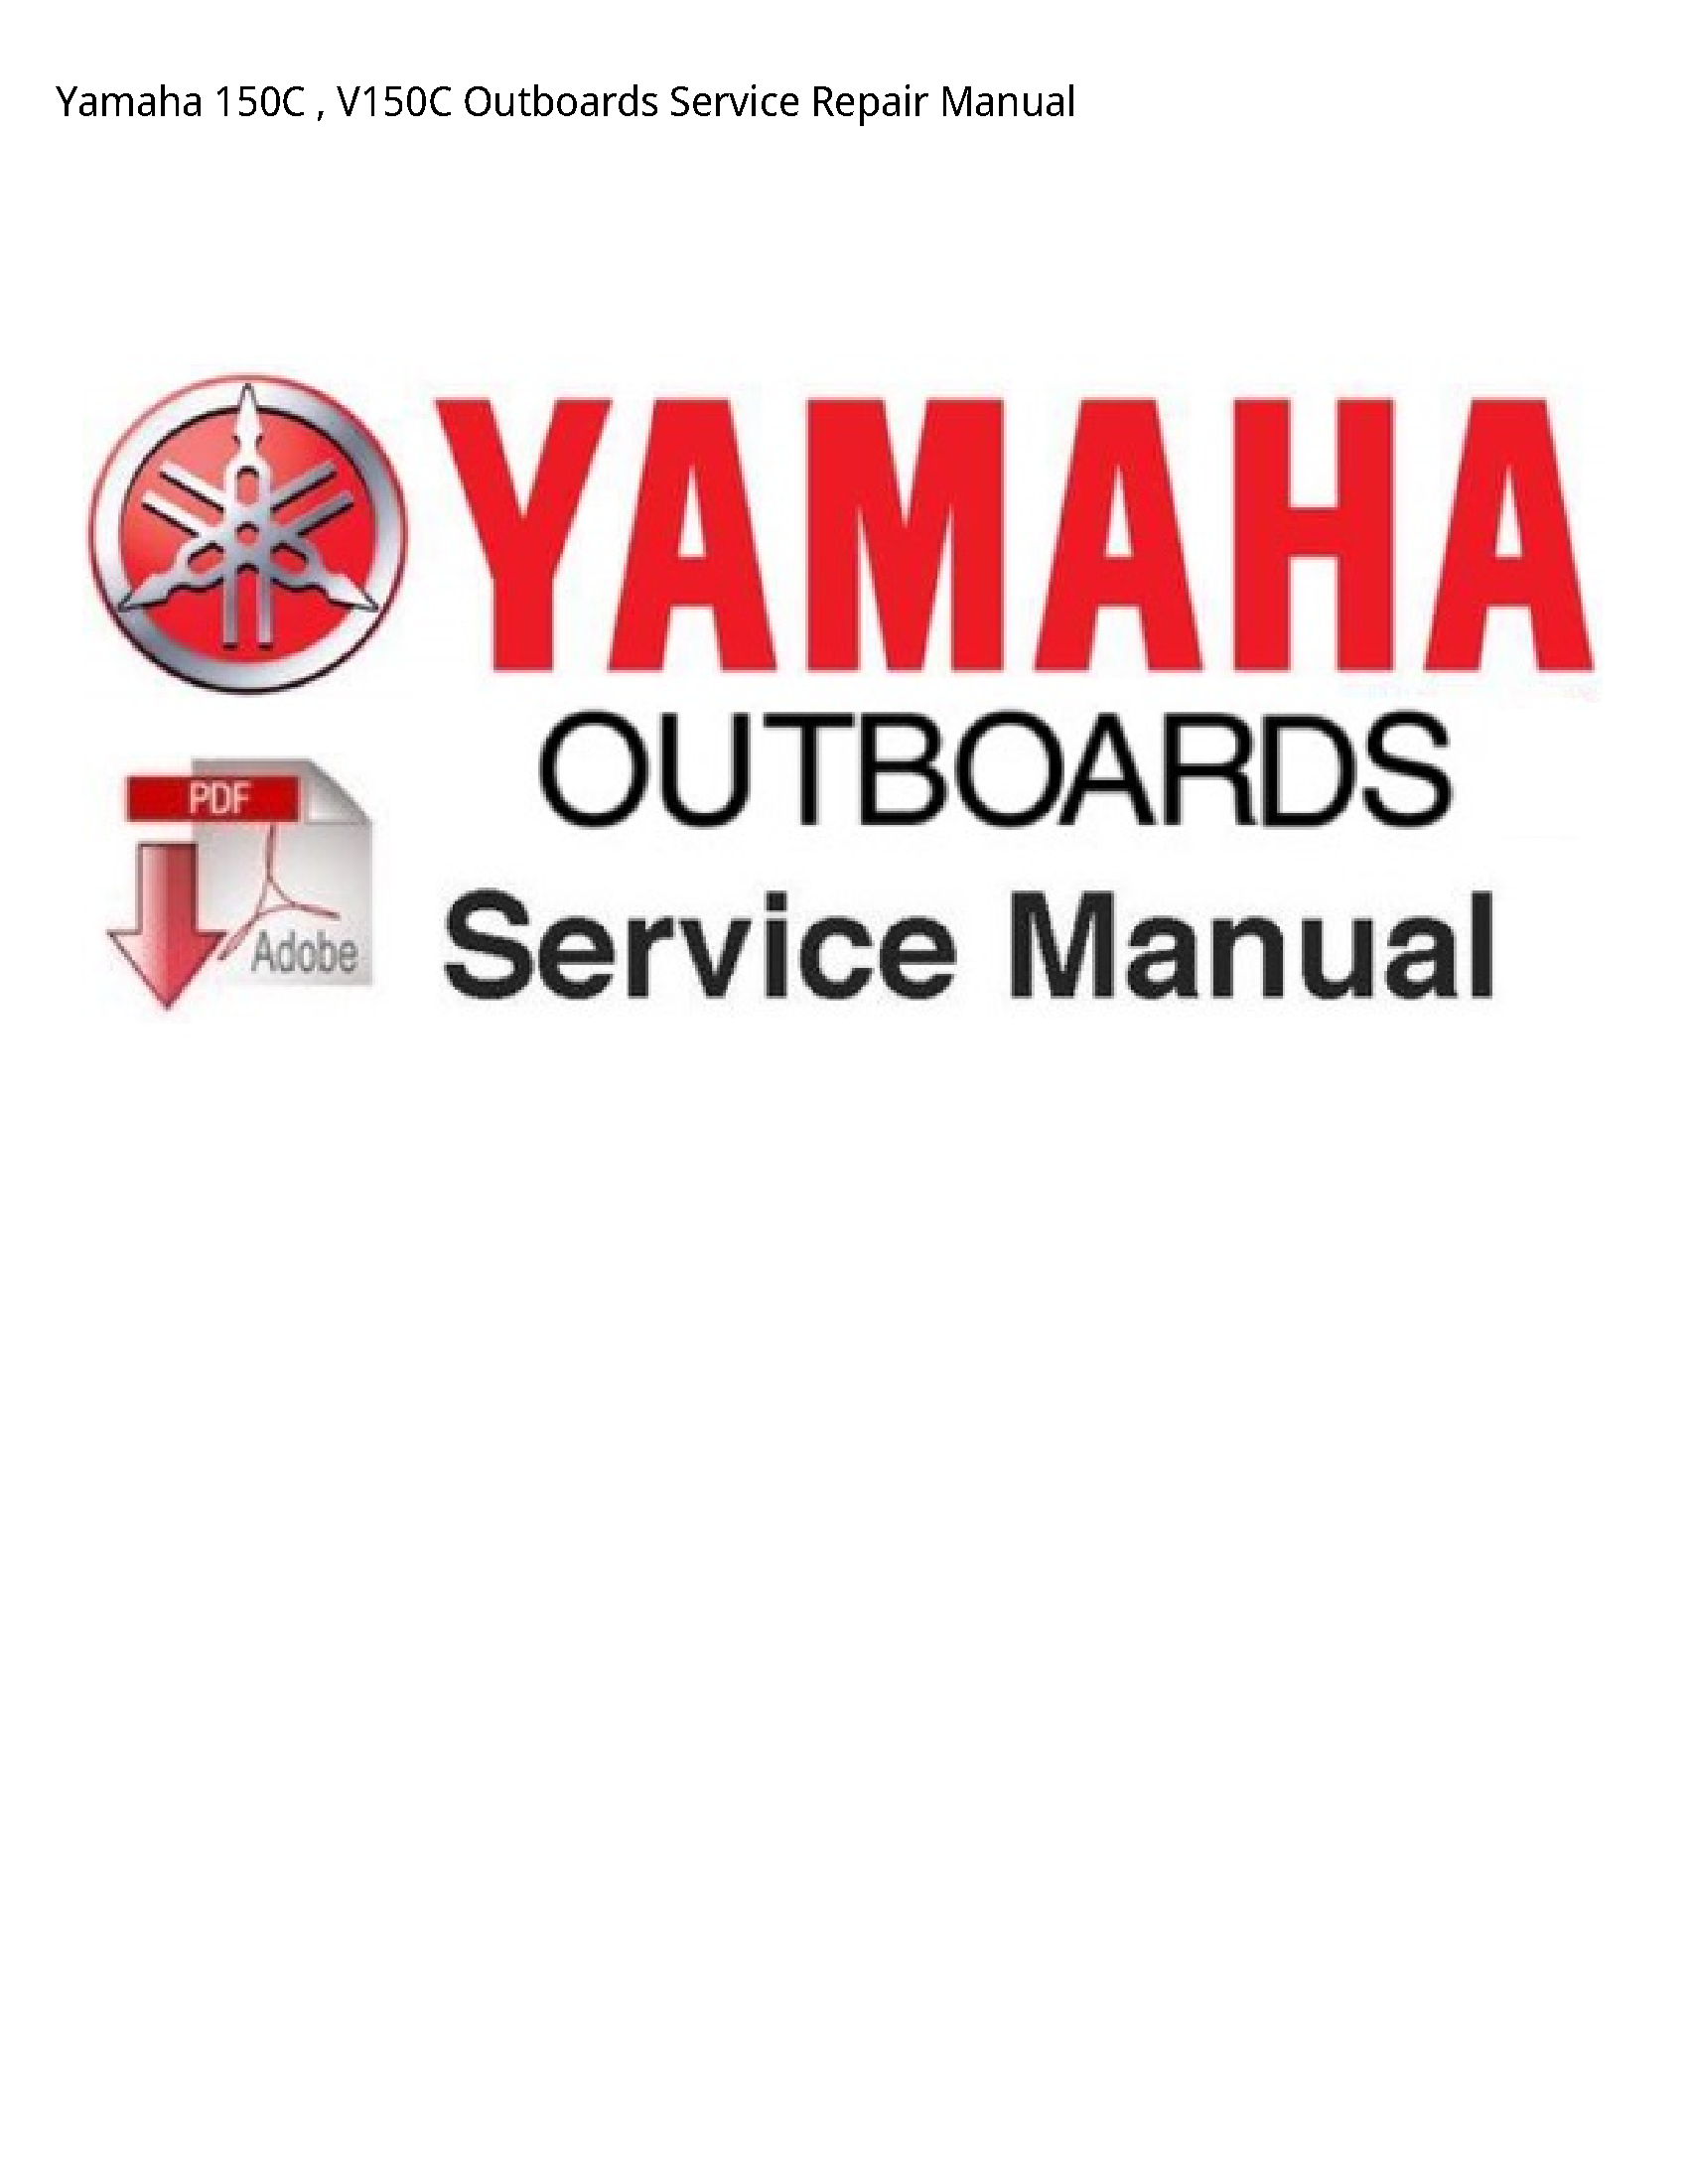 Yamaha 150C Outboards manual